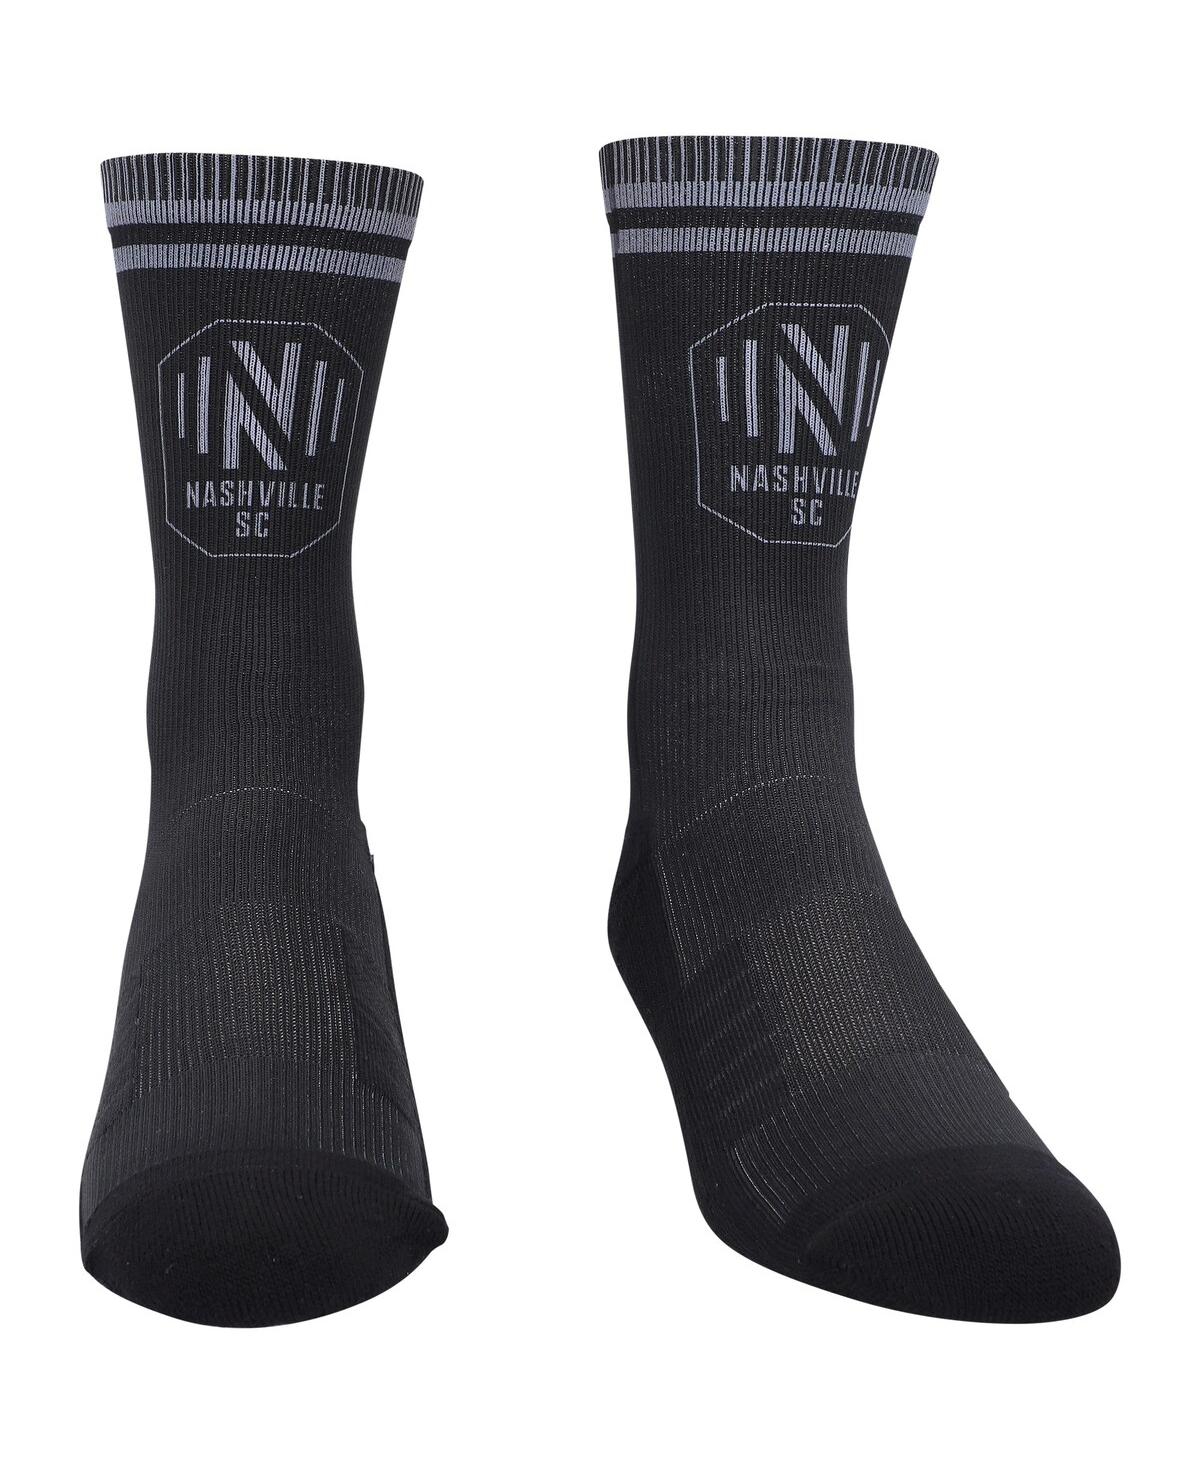 Men's and Women's Strideline Nashville Sc Jersey Hook Crew Socks - Black